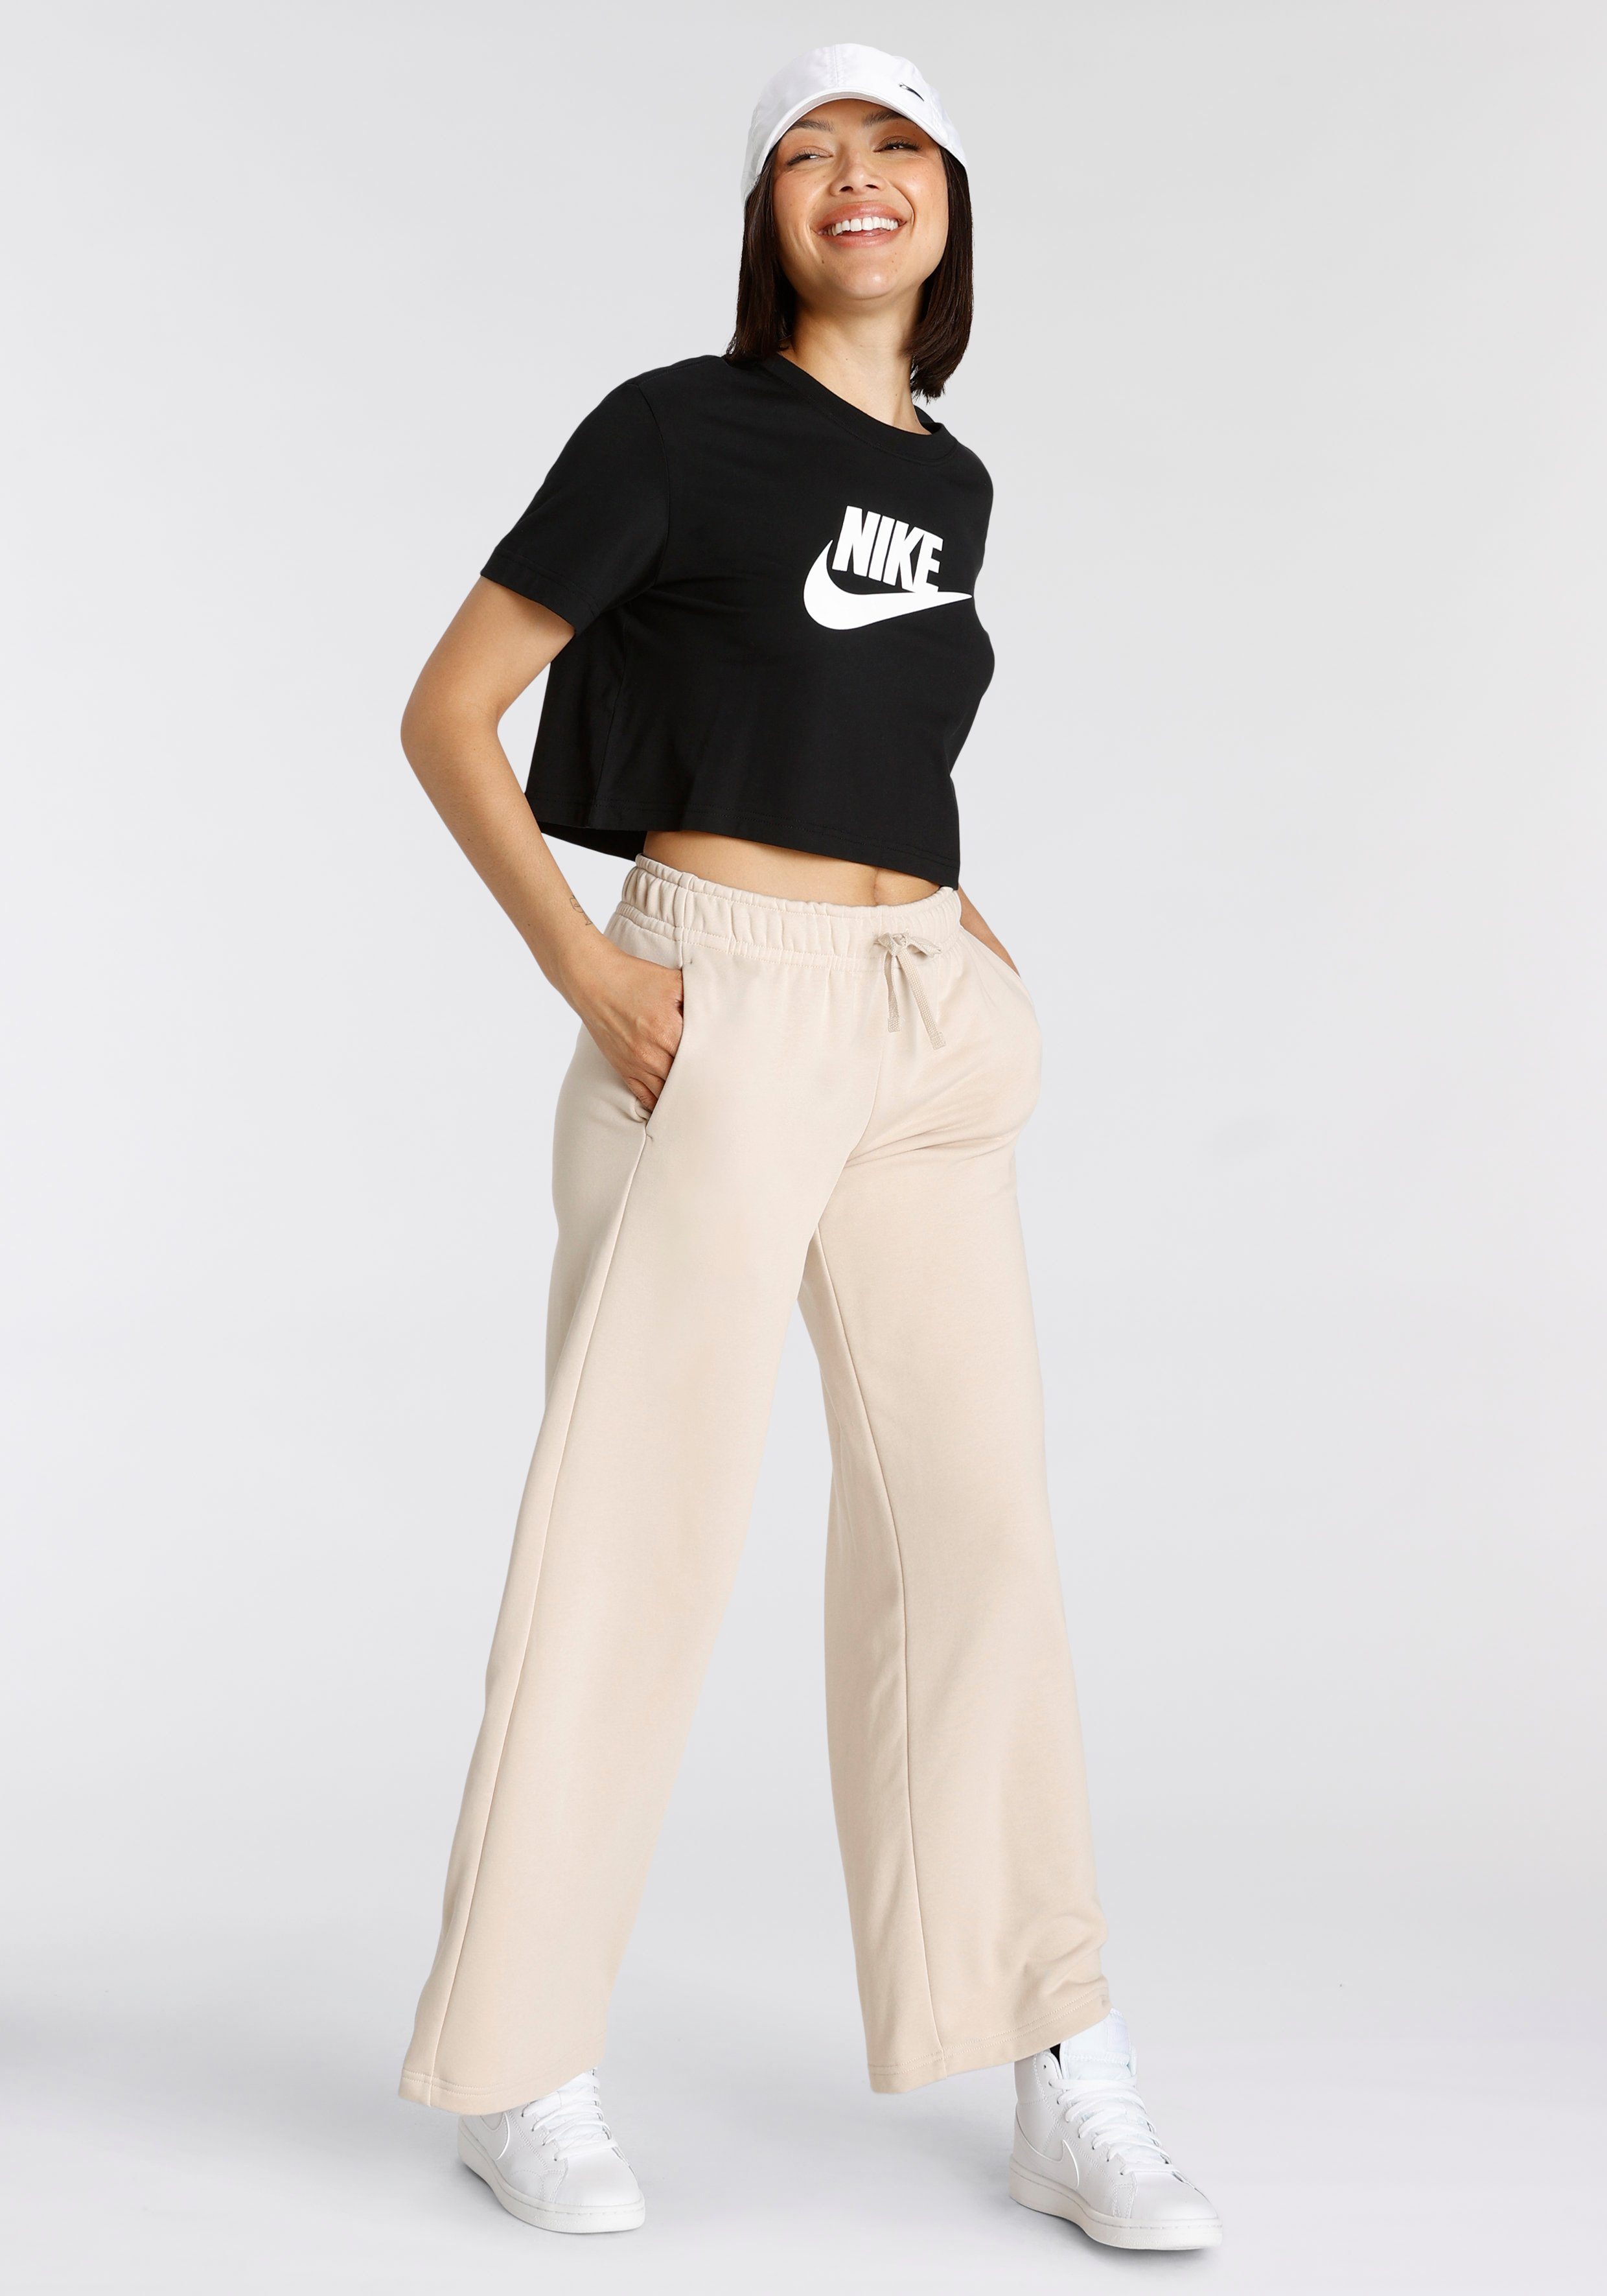 Befürwortung Nike Sportswear T-Shirt ESSENTIAL WOMEN'S schwarzweiss T-SHIRT LOGO CROPPED